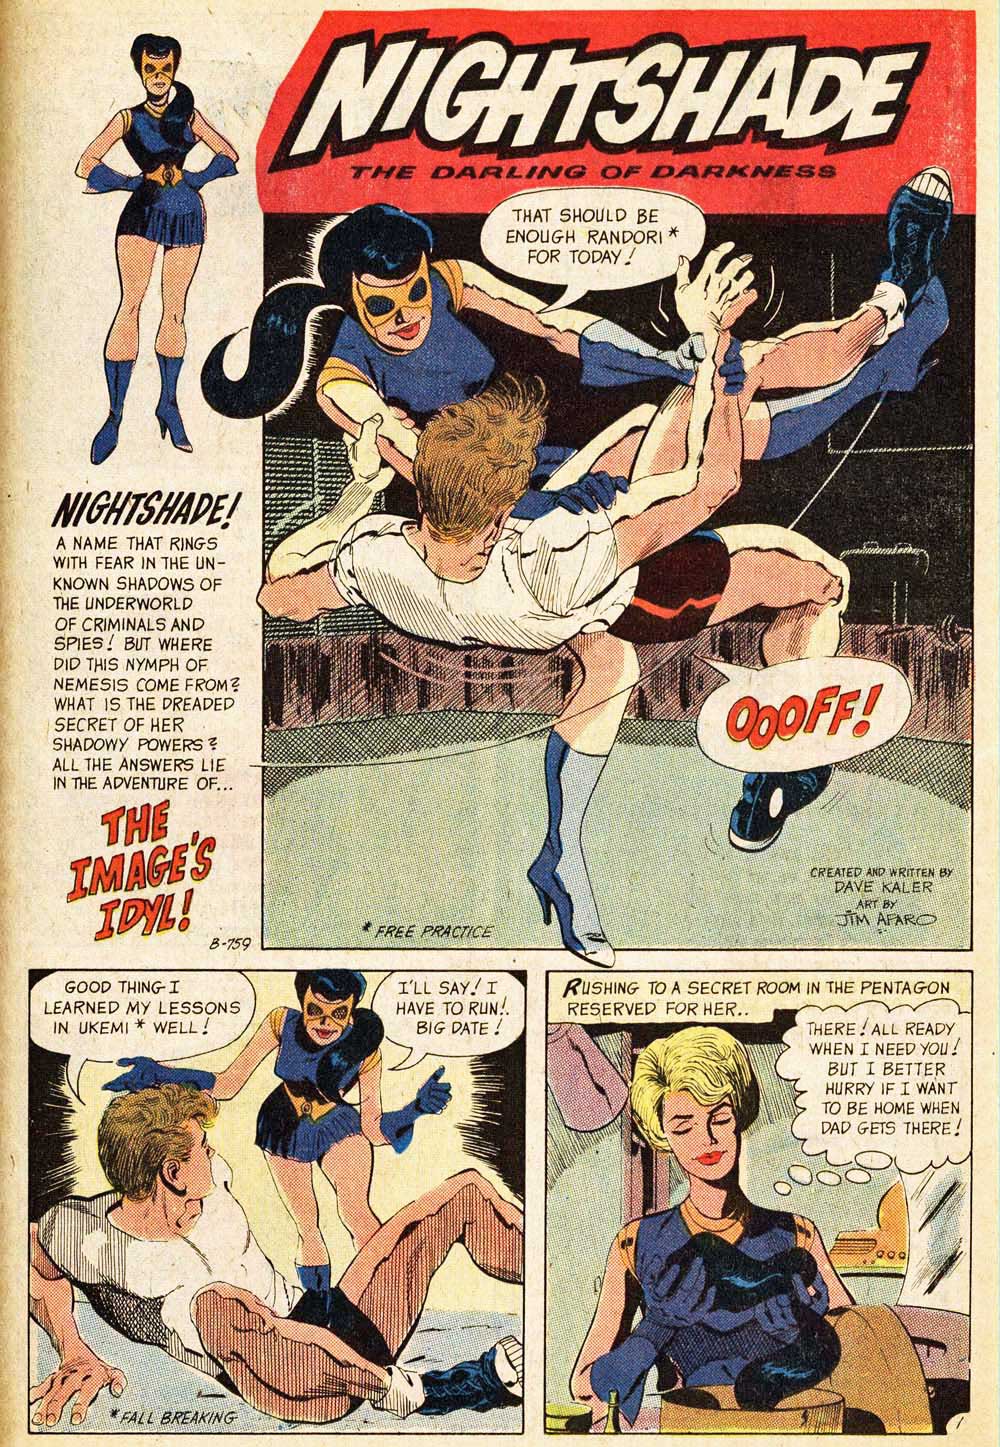 Nightshade's back-up strip from Captain Atom #87 (1967) from Charlton Comics by David Kaler and Jim Aparo